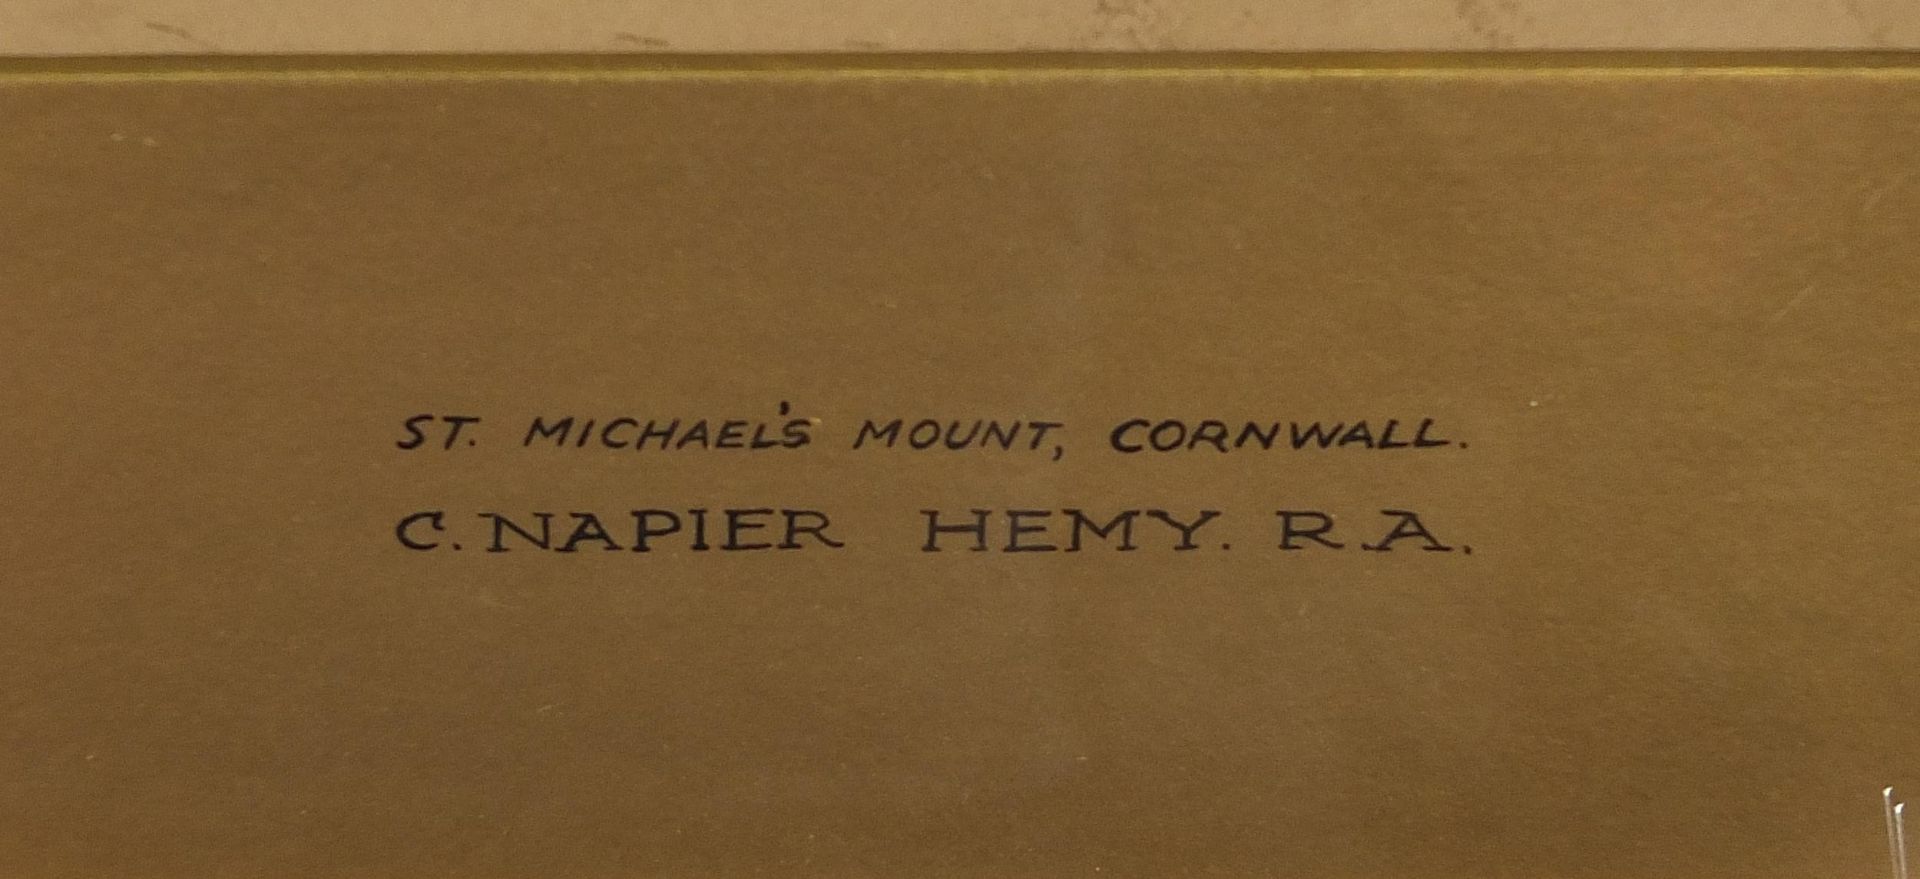 Charles Napier Hemy 1895 - St Michael's Mount, Cornwall, late 19th century maritime interest - Image 4 of 5